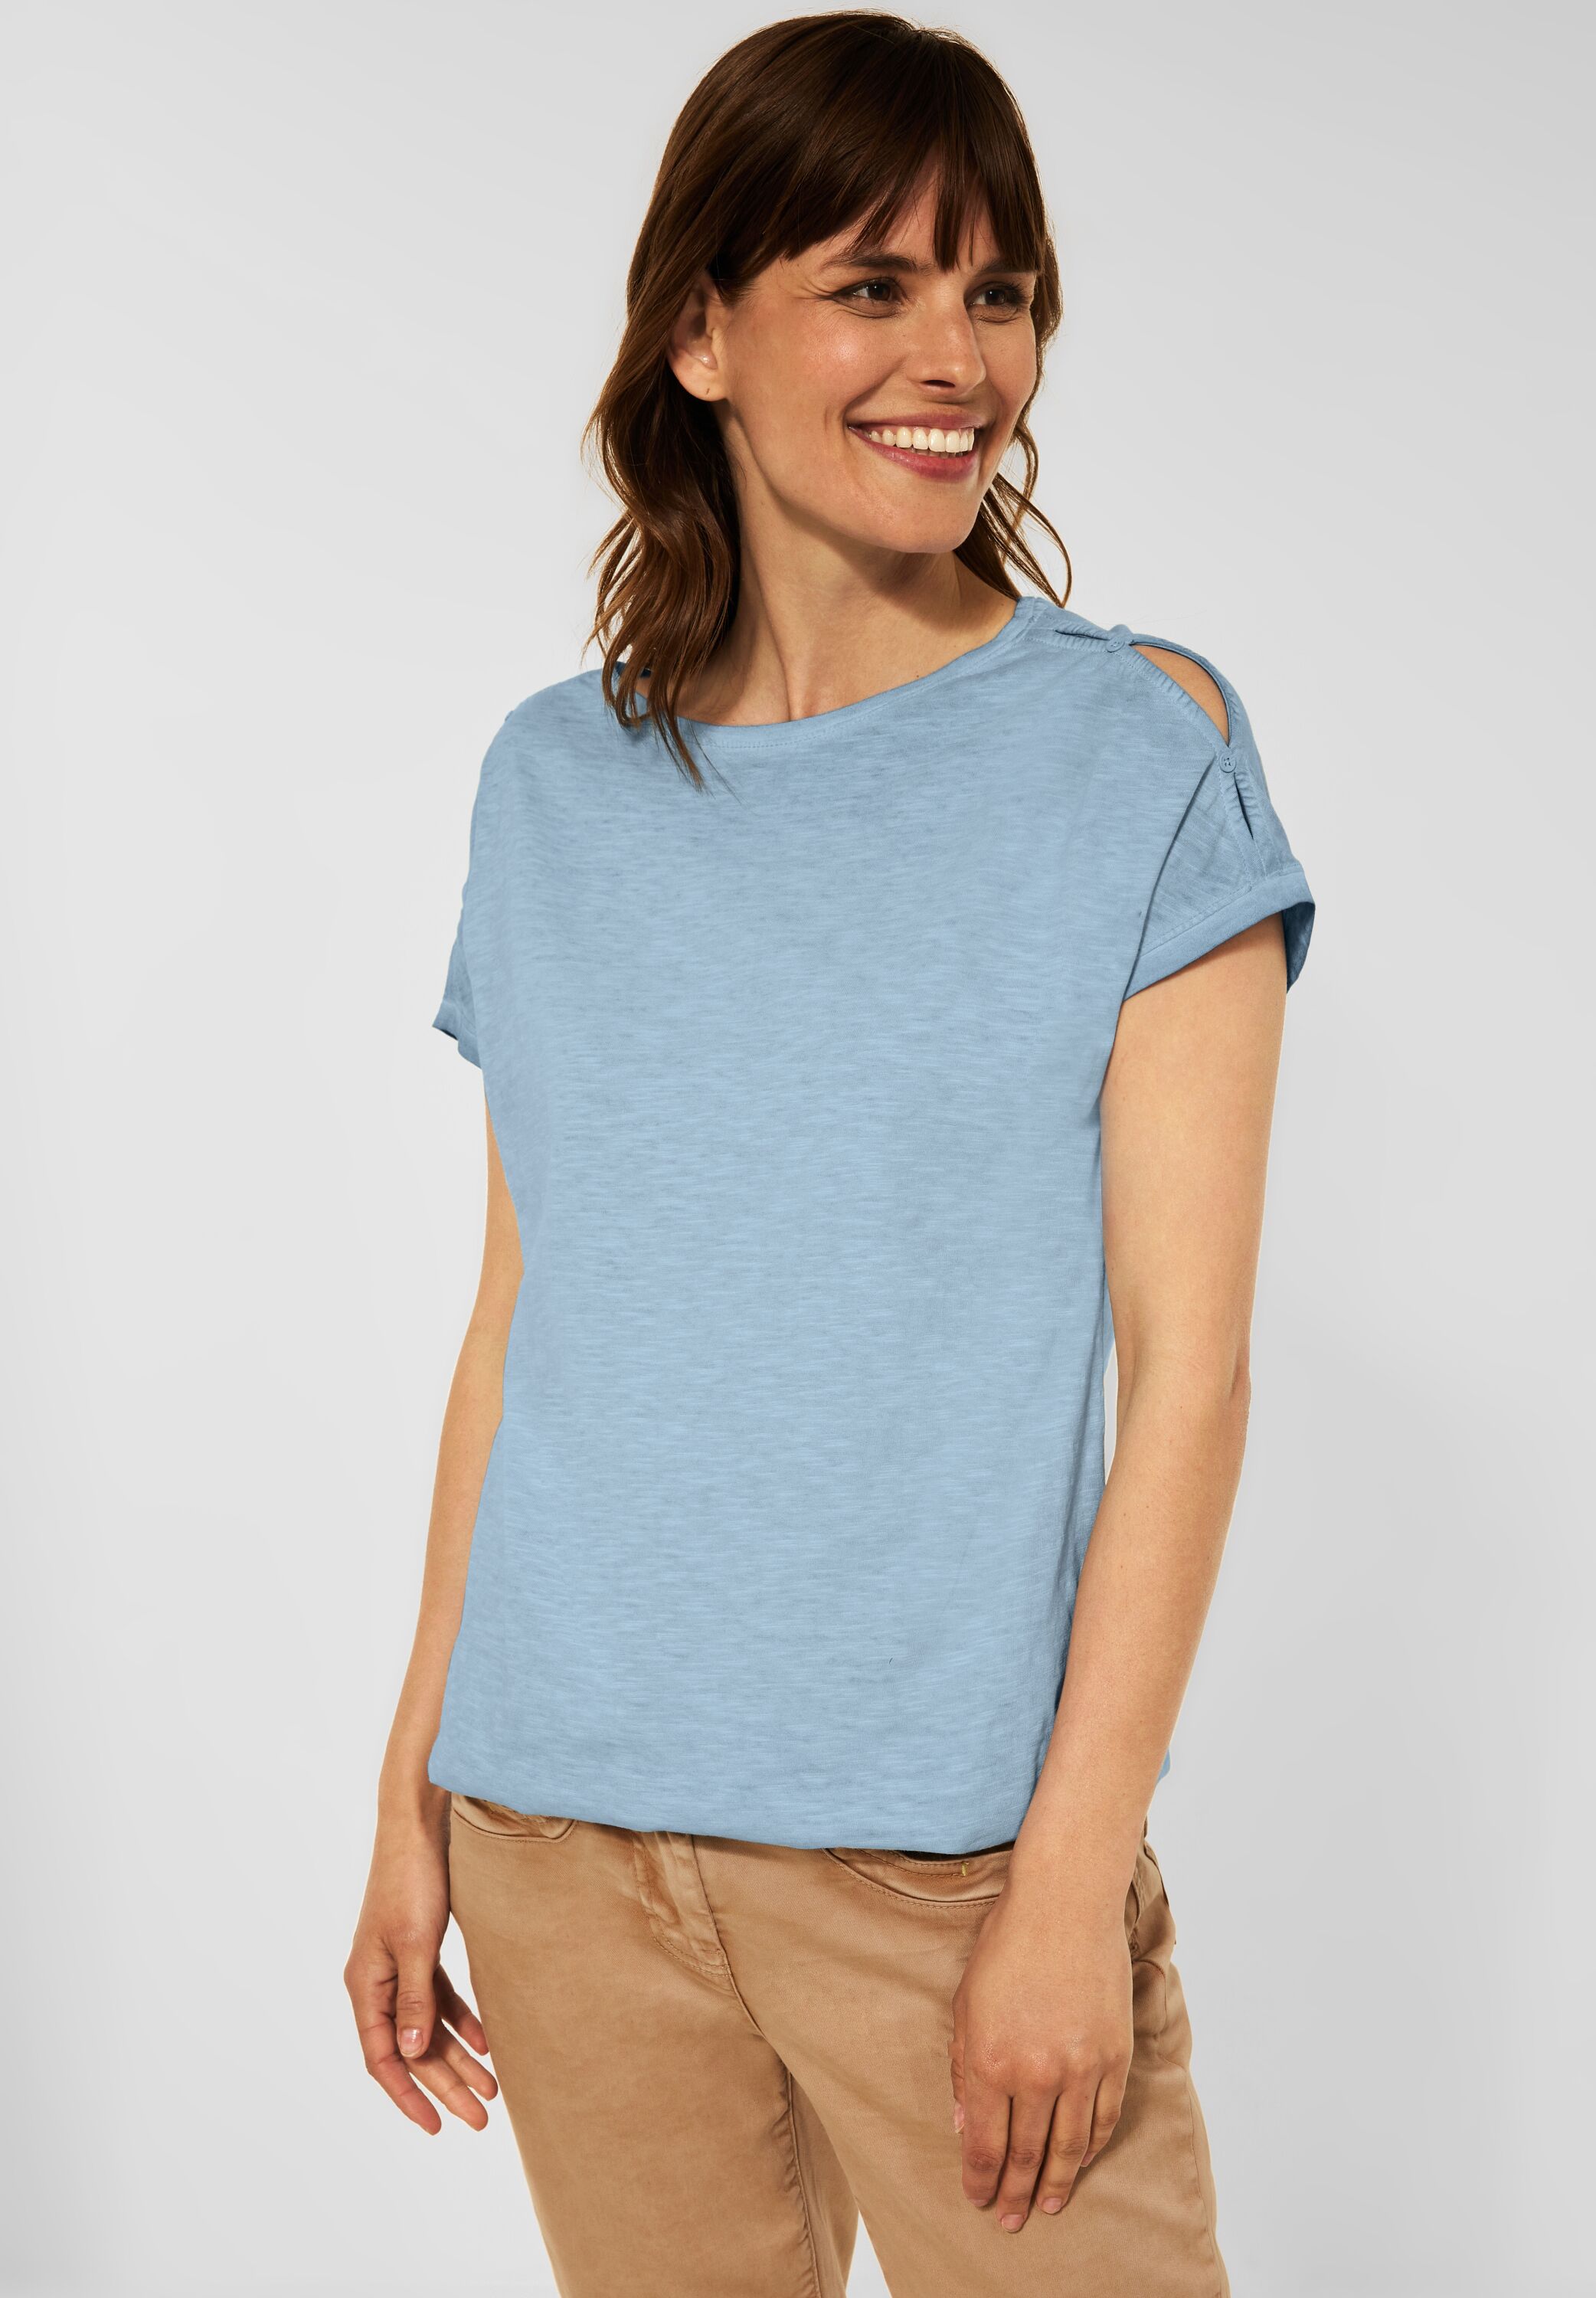 - in B317979-13908 Blue CECIL SALE Mode CONCEPT T-Shirt im reduziert Inka